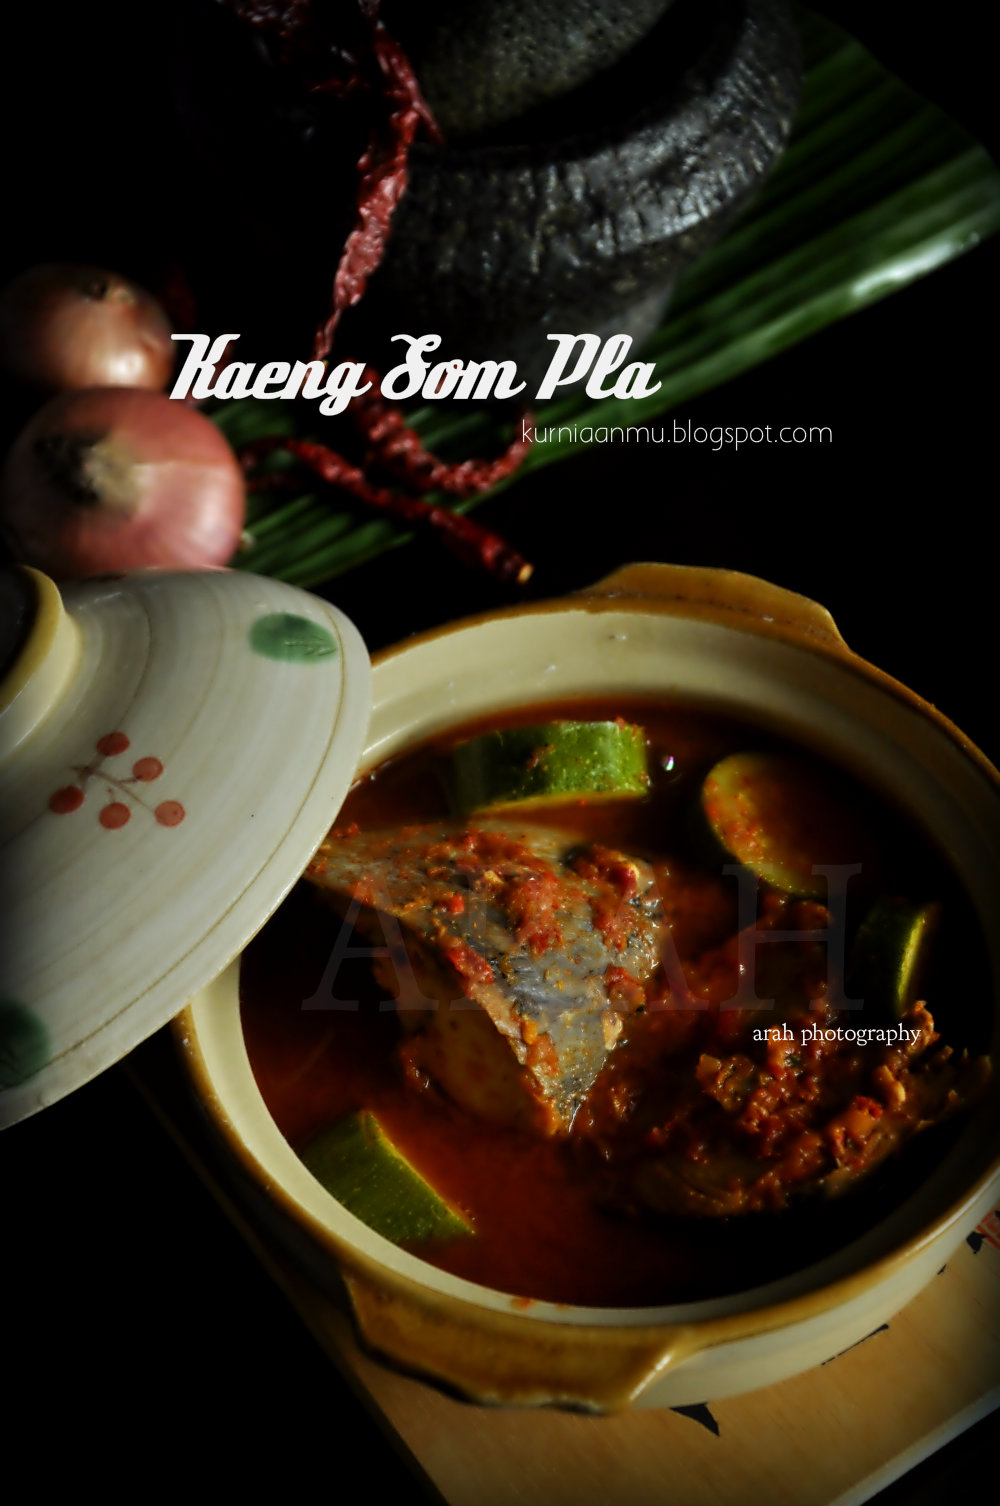 Arah: Kaeng Som Pla (Thai Sour Curry)